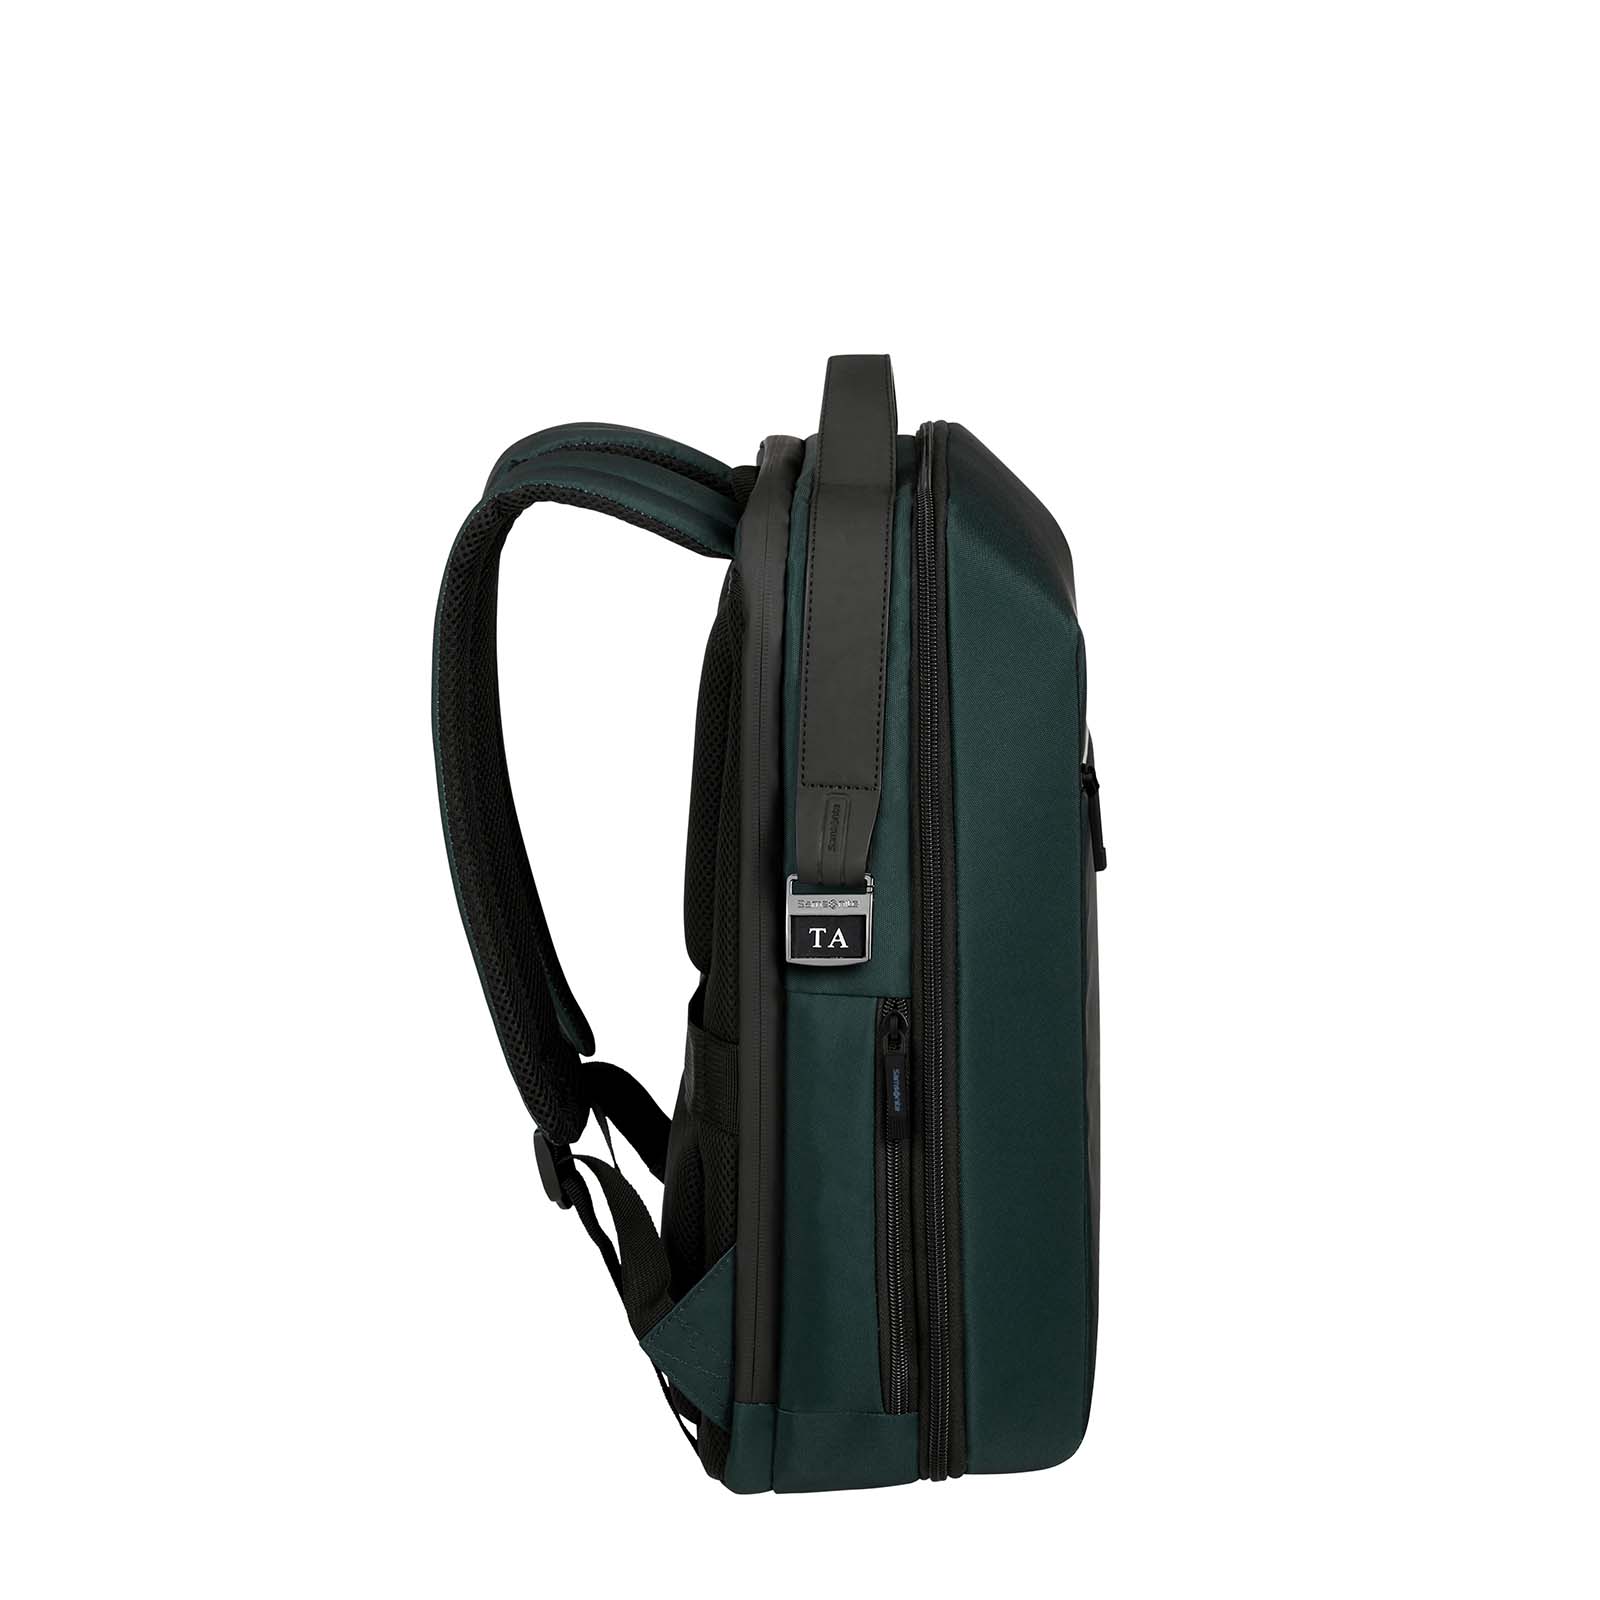 Samsonite-Litepoint-15-Inch-Laptop-Backpack-Urban-Green-Tag